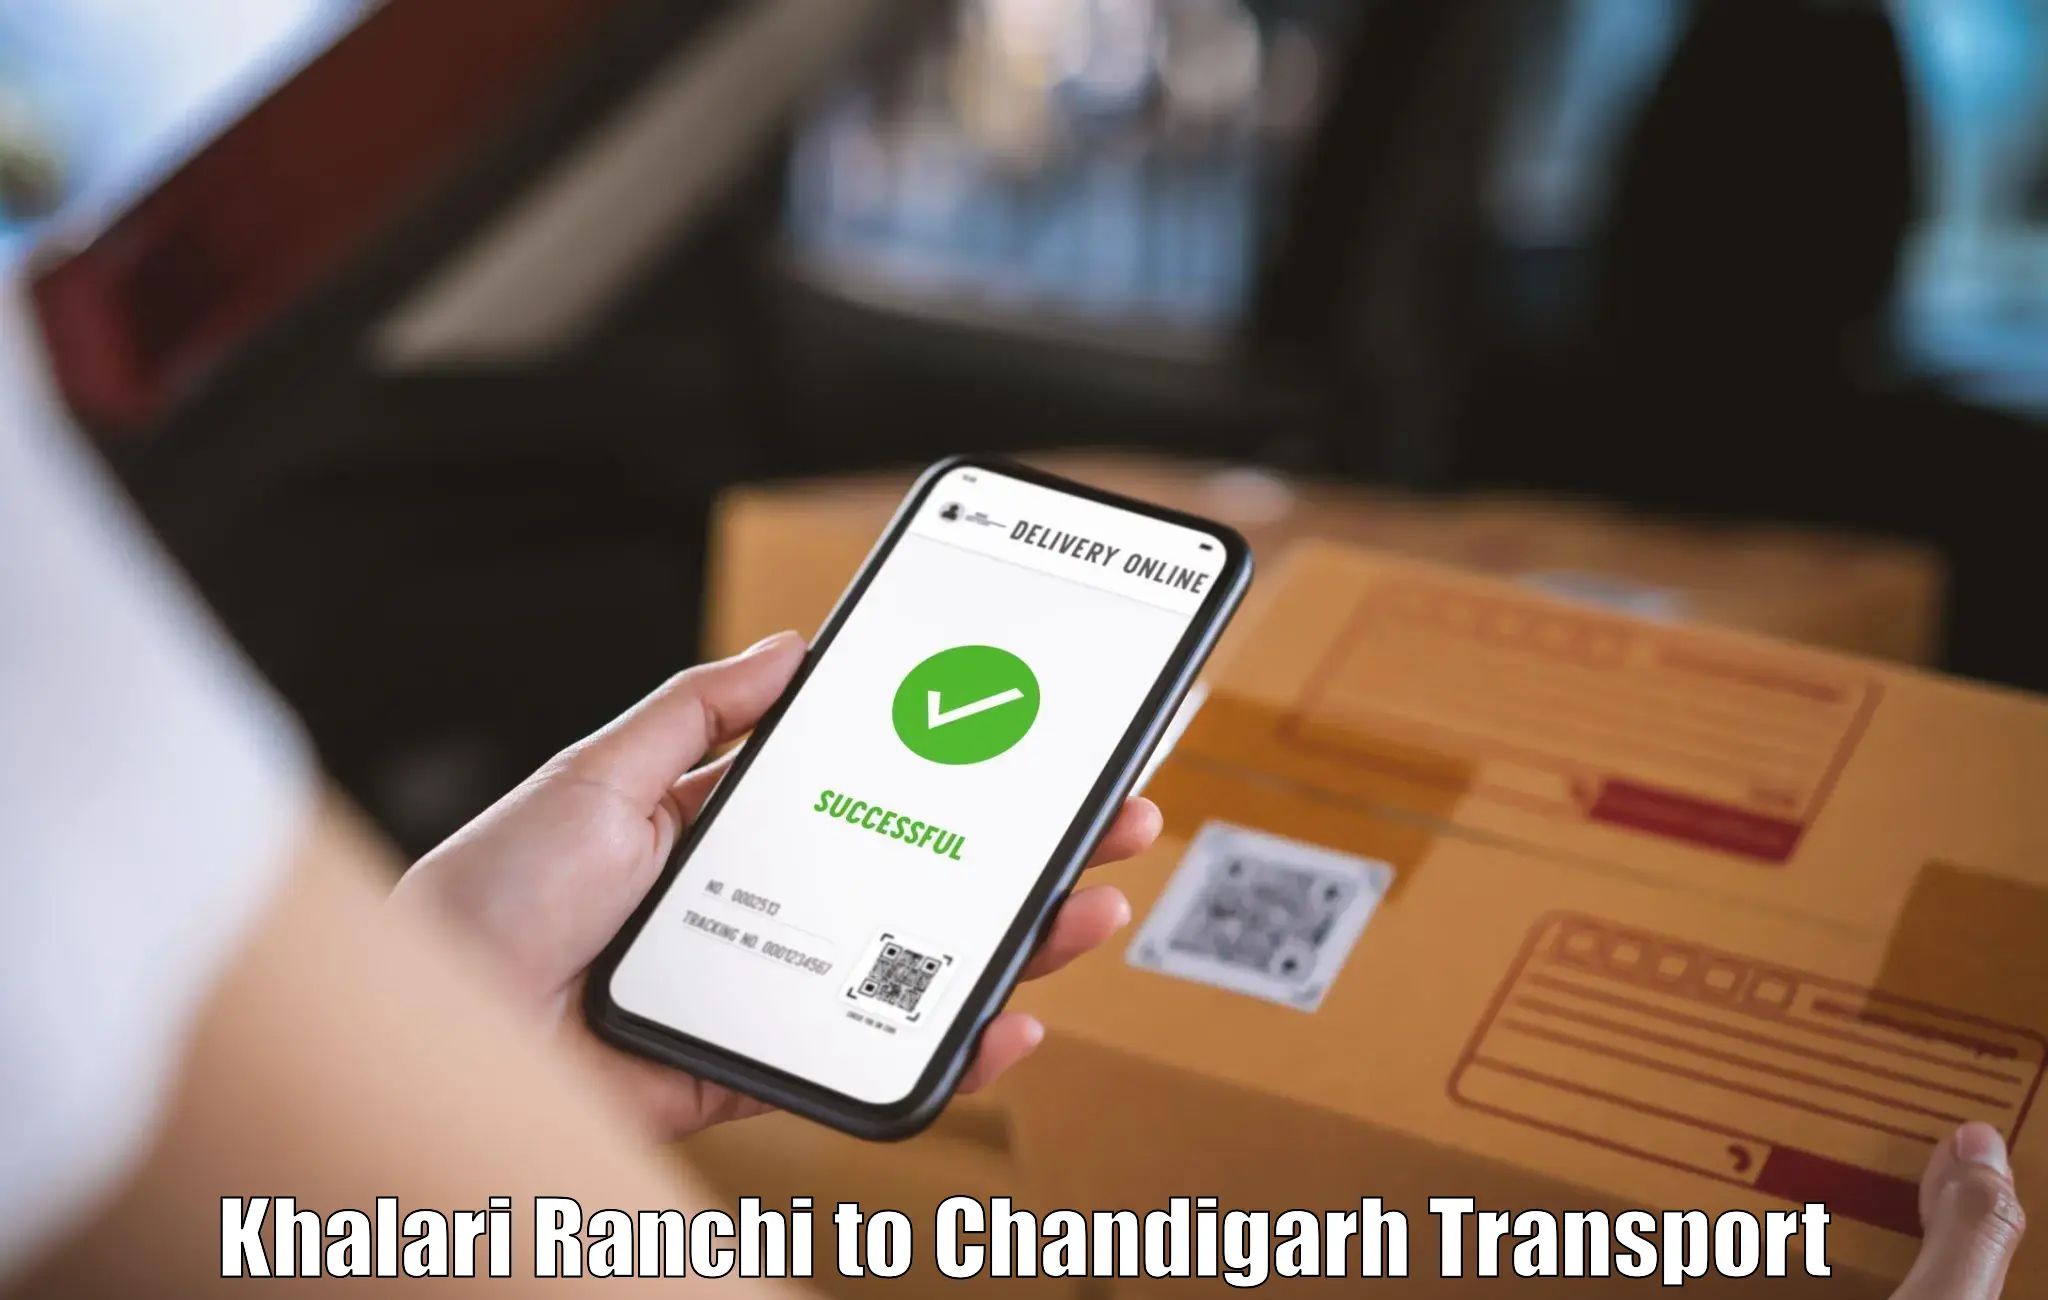 Nationwide transport services Khalari Ranchi to Chandigarh